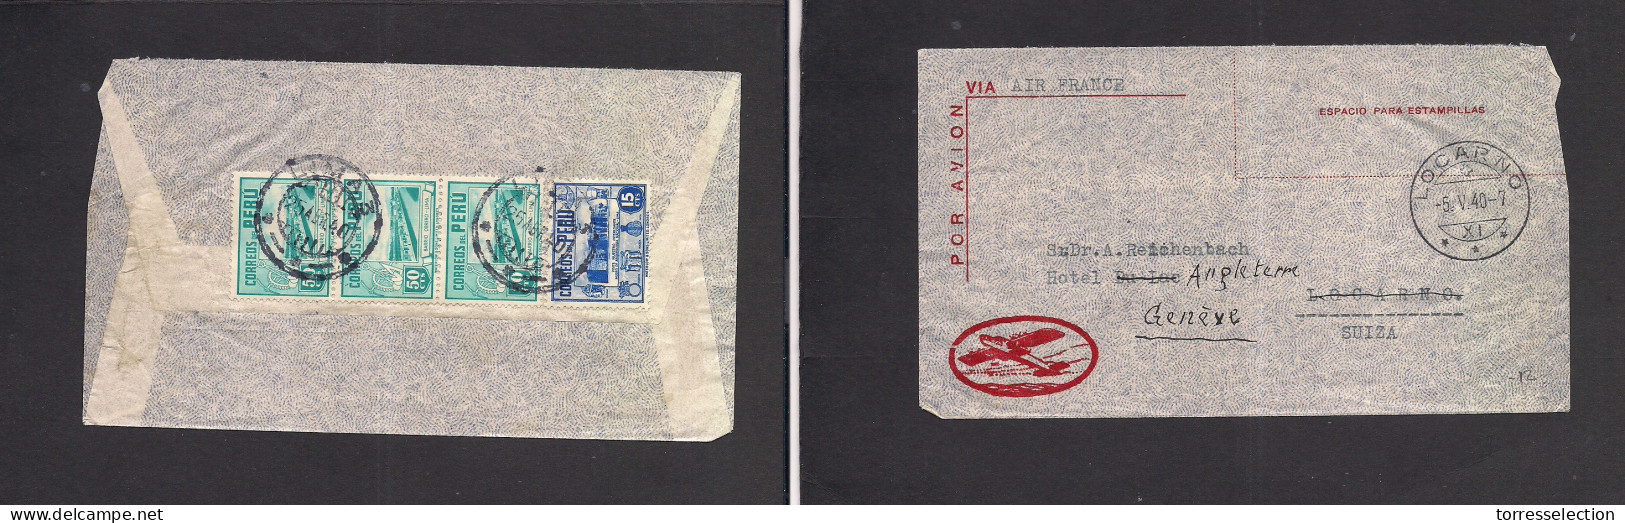 PERU. 1940 (25 April) Lima 3 - Switzerland, Locarno (5 May) Reverse Air France Multifkd Envelope. 1,65 Sales Rate. Fine. - Pérou